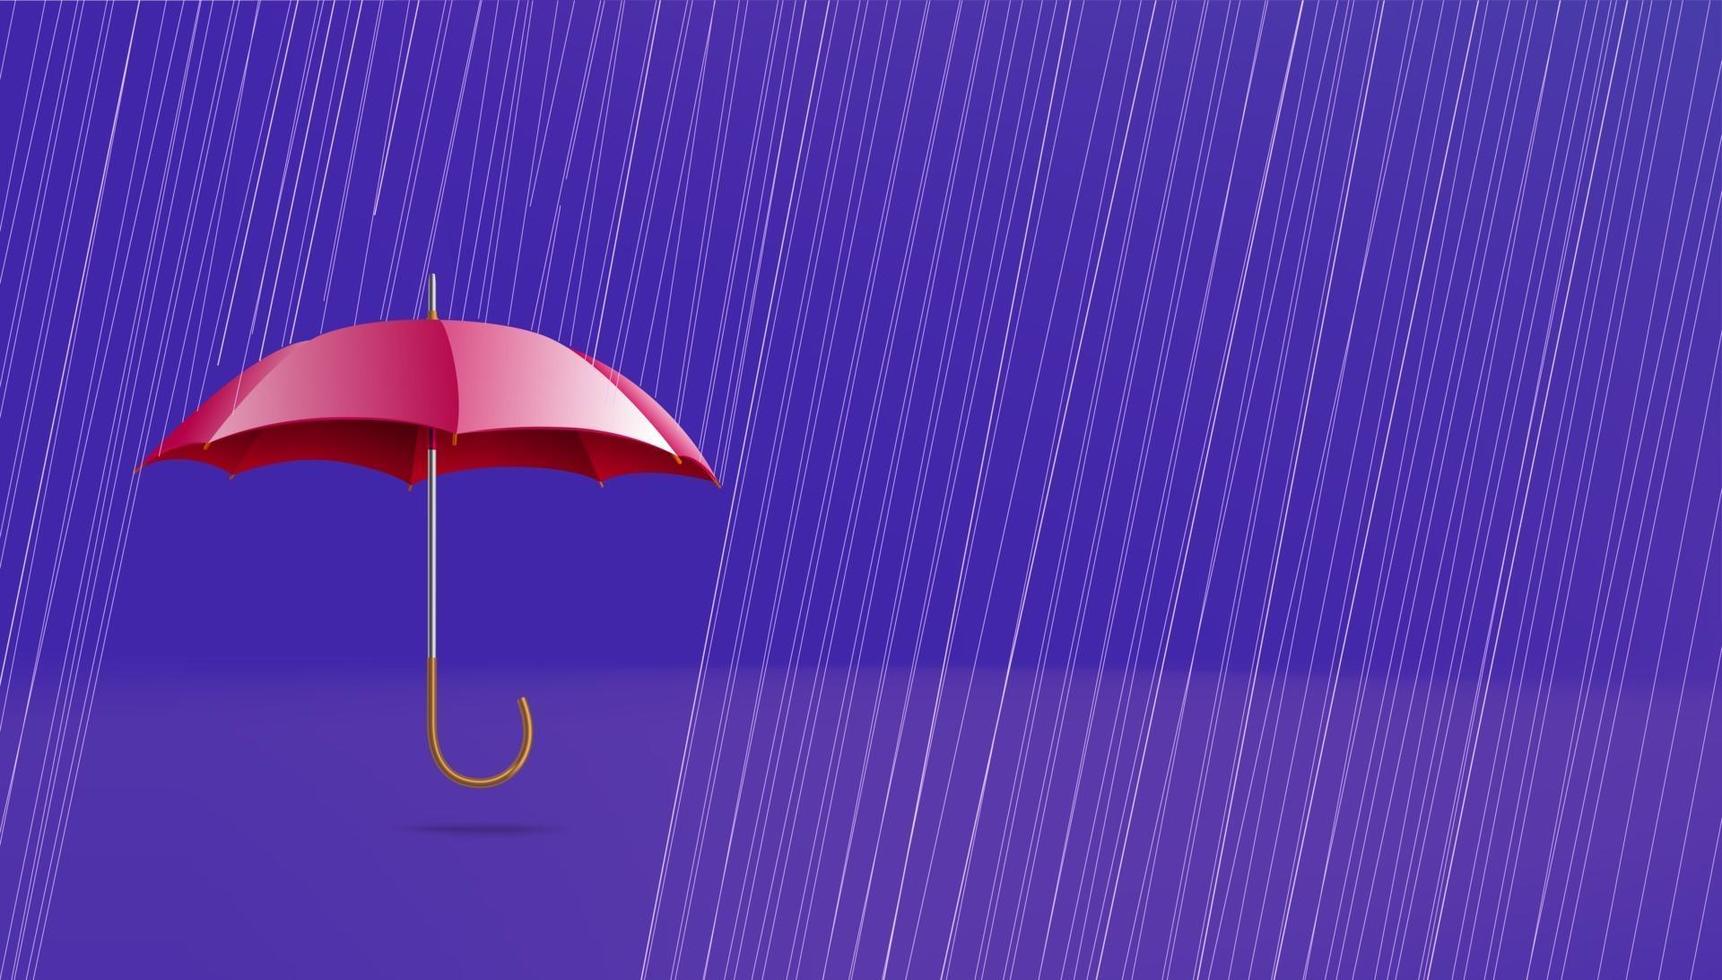 Umbrella banner with copy space vector